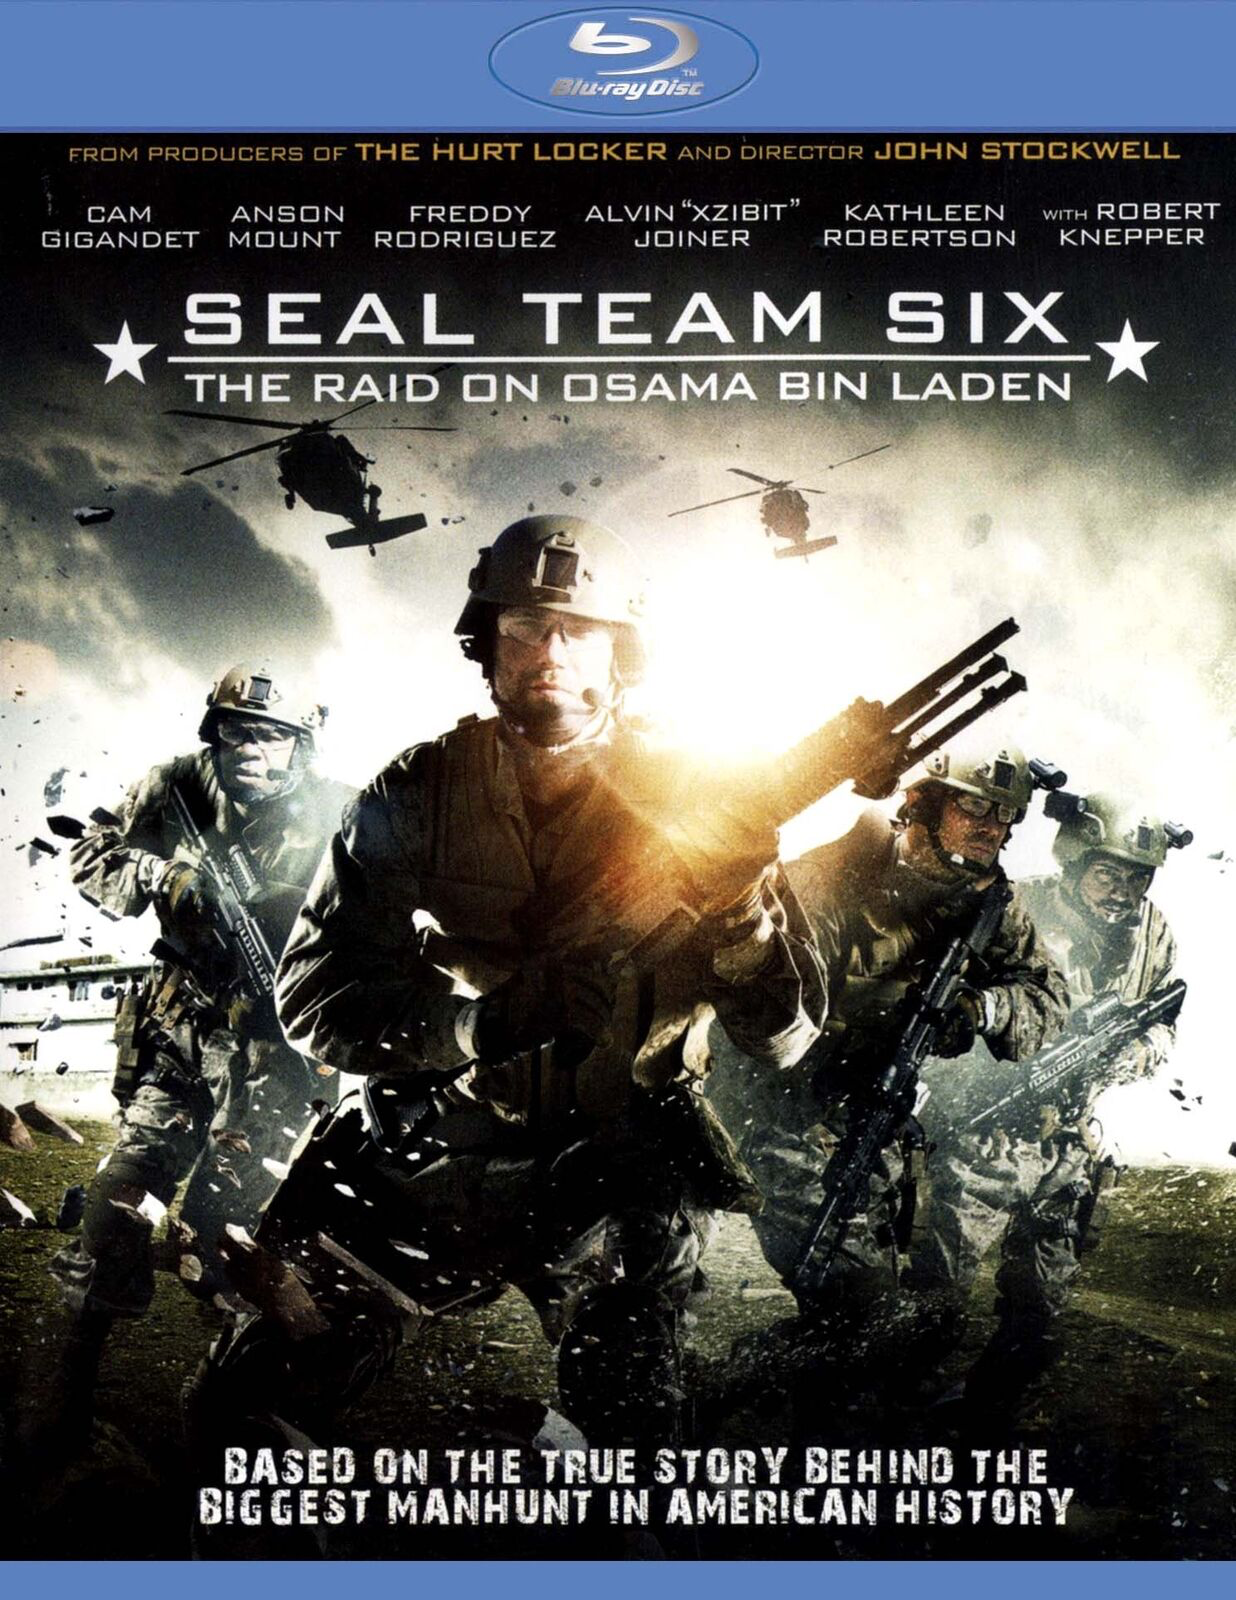 SEAL Team Six: The Raid On Osama Bin Laden - Blu-ray Action/Adventure 2012 NR